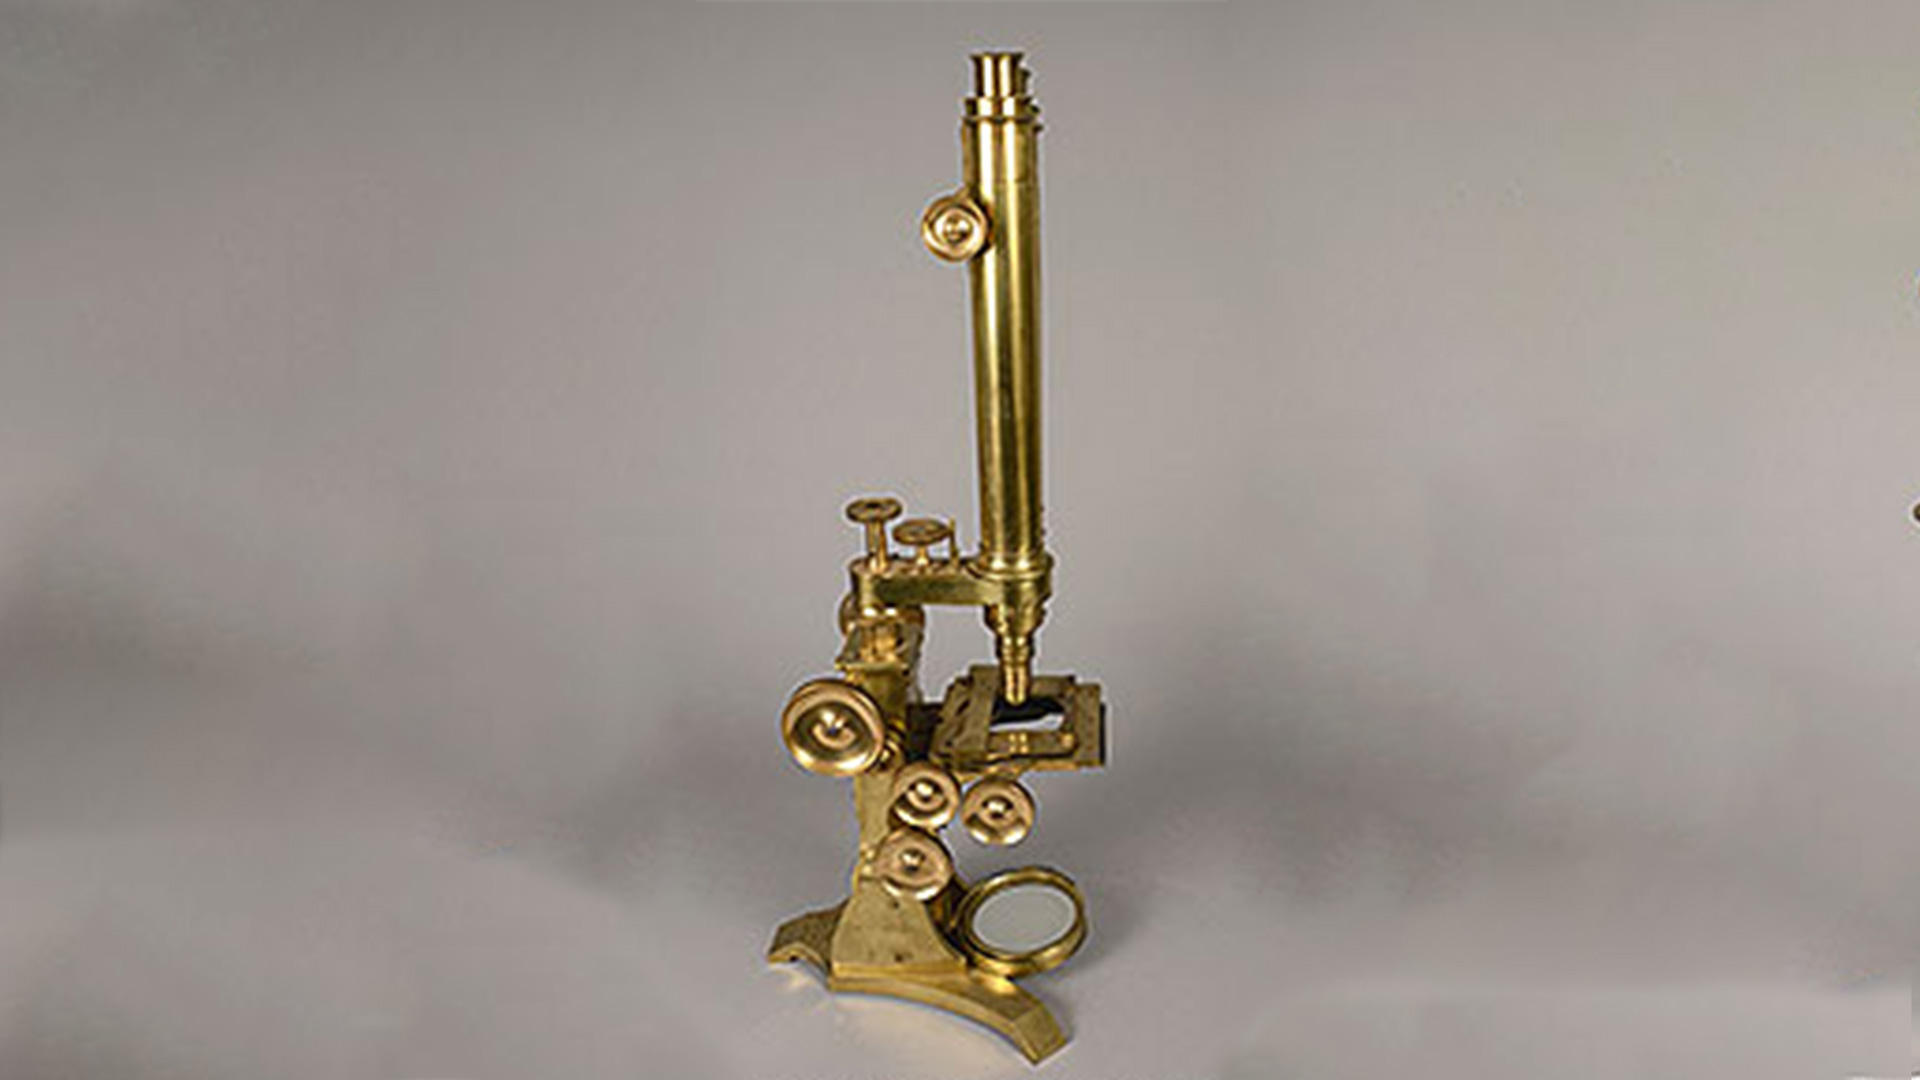 very shiny, entirely brass upright microscope with long stem